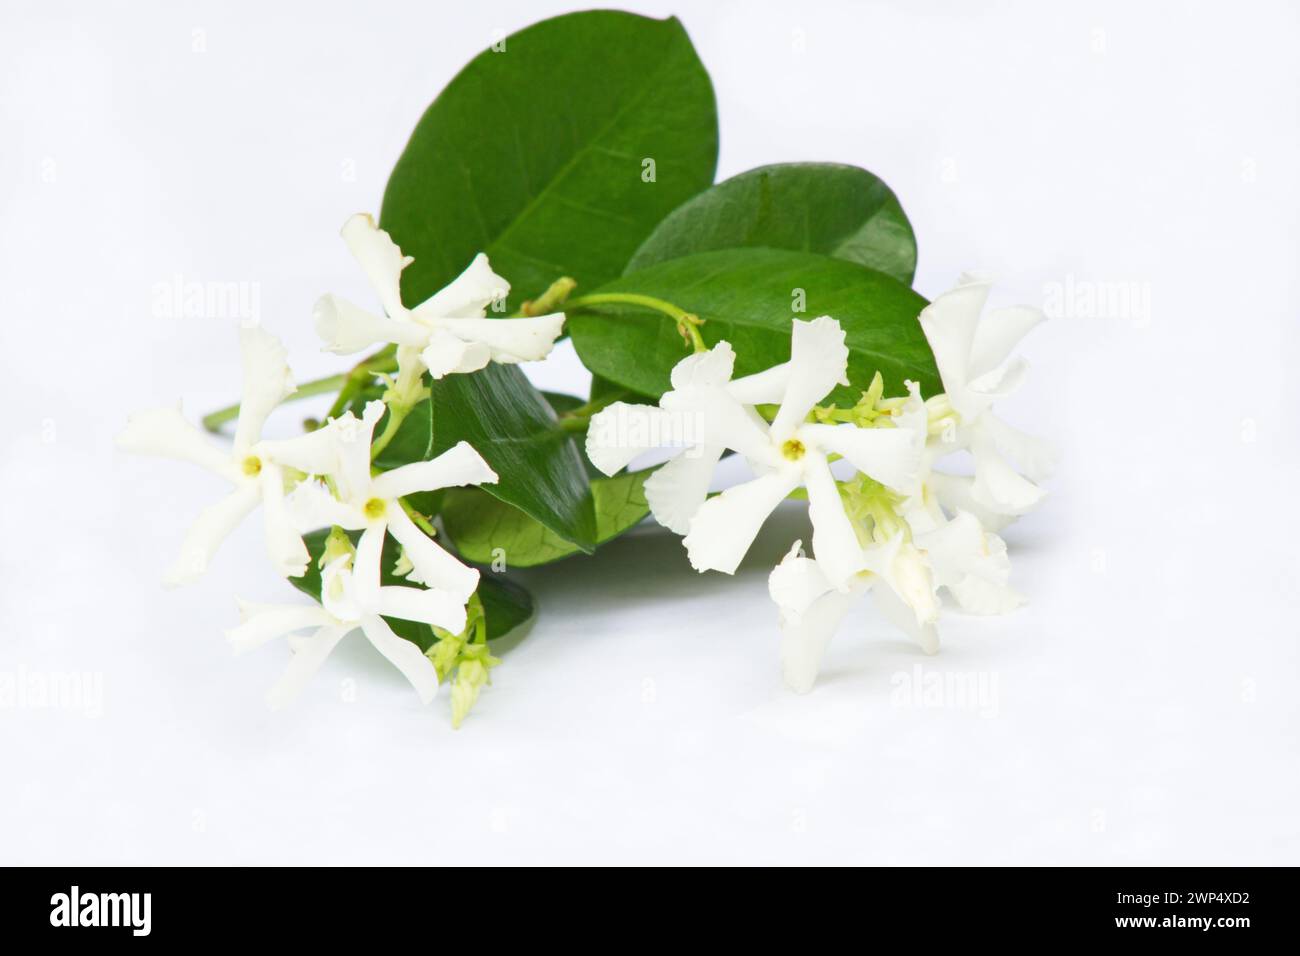 Star Jasmine (Trachelospermum jasminoides) blossoms on a white background Stock Photo